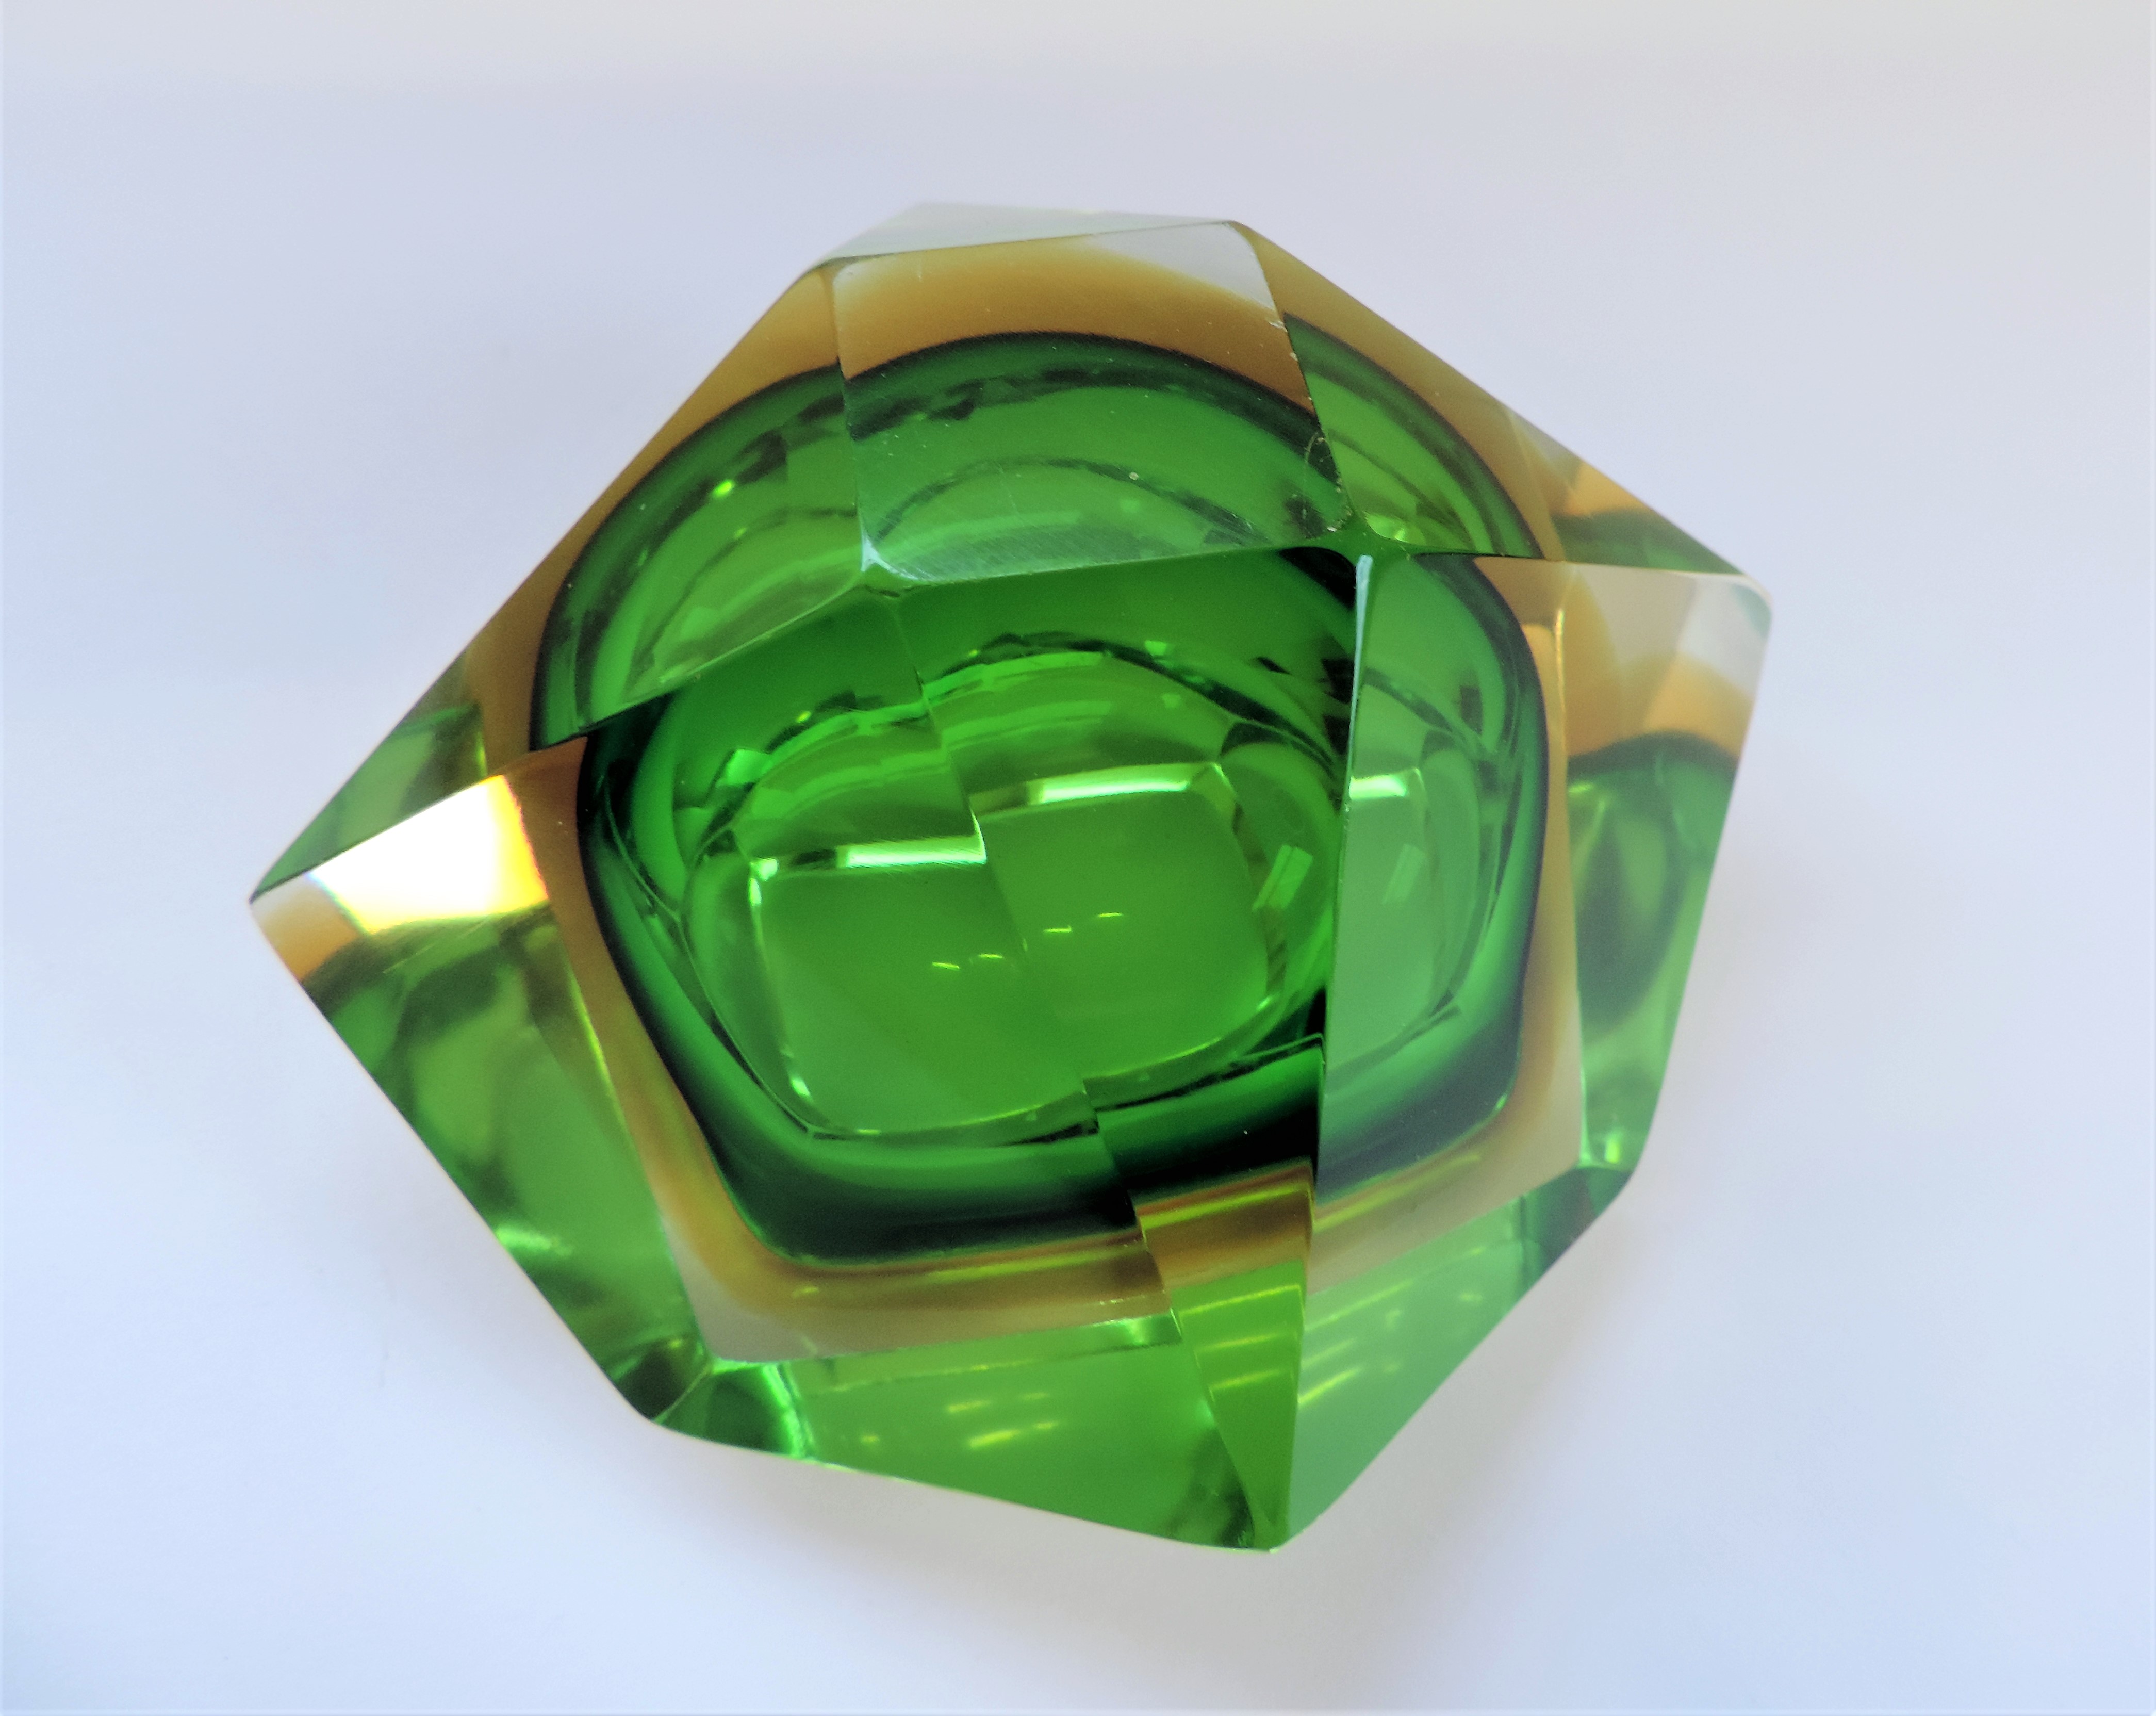 Mandruzzato Murano Faceted Glass Paperweight - Image 4 of 5